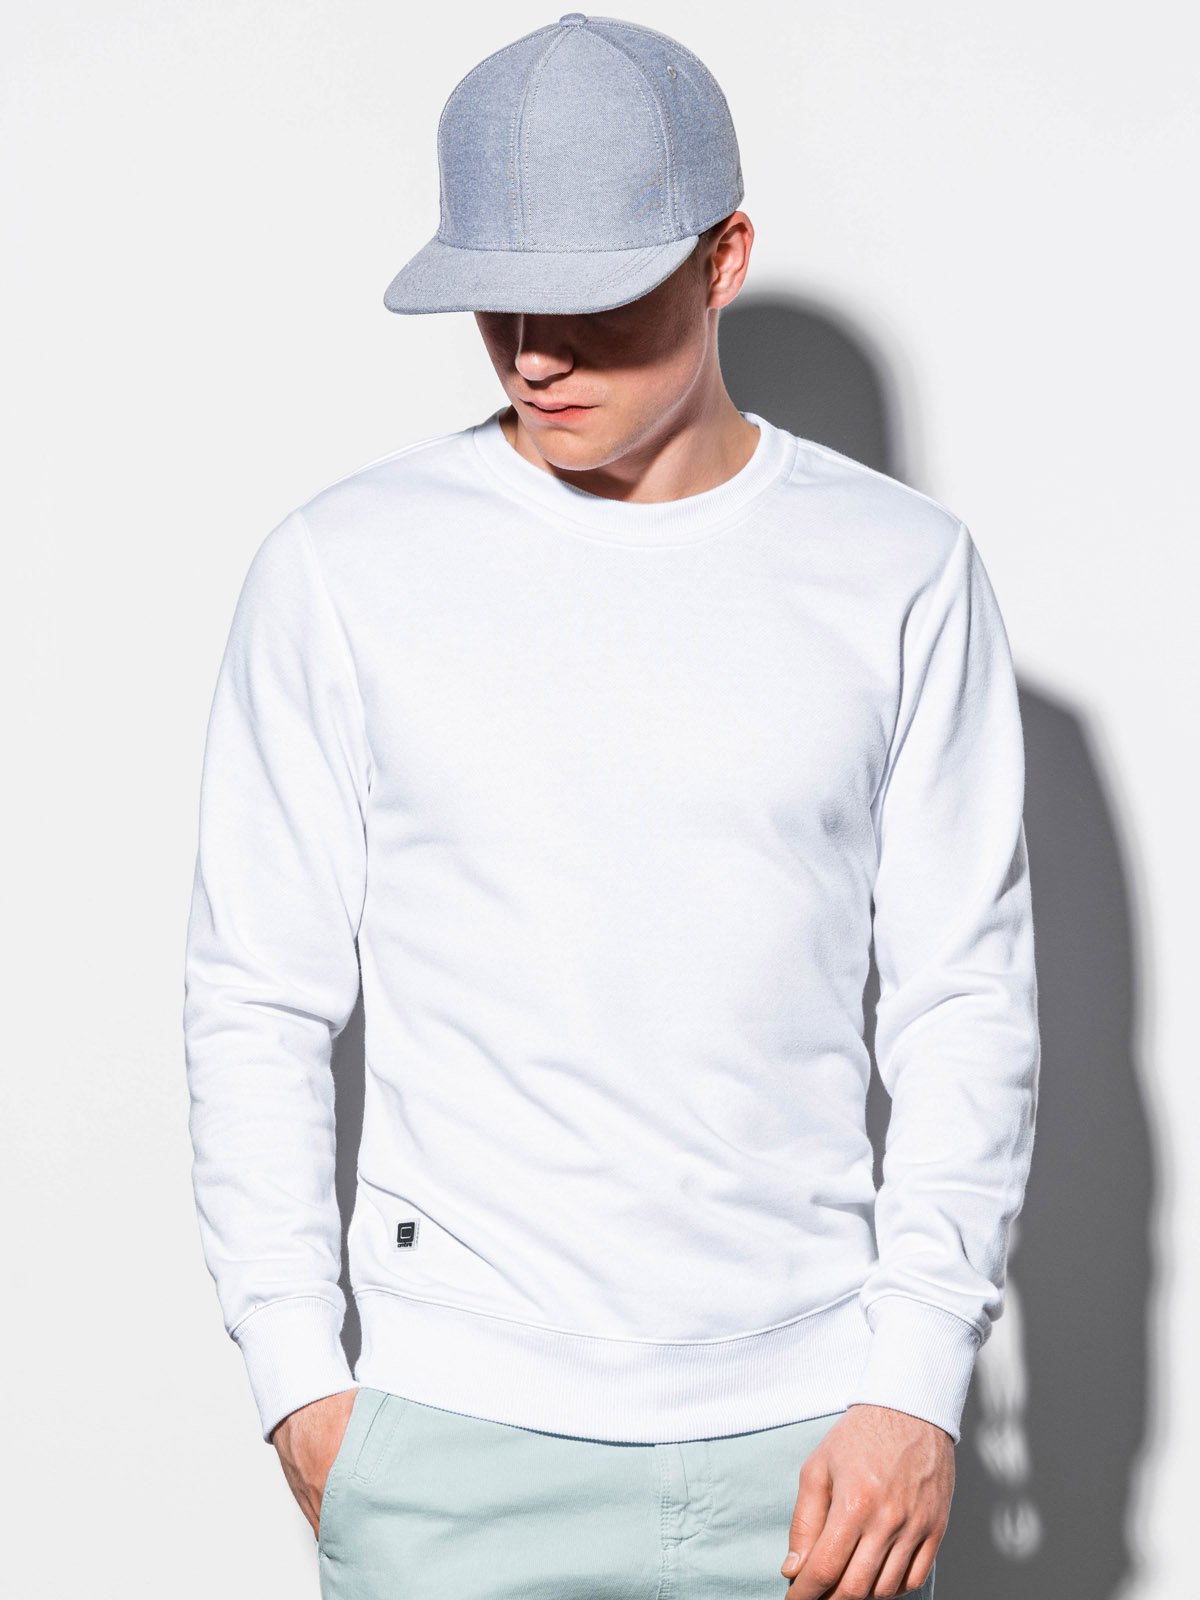 Buy > plain white sweatshirt mens > in stock